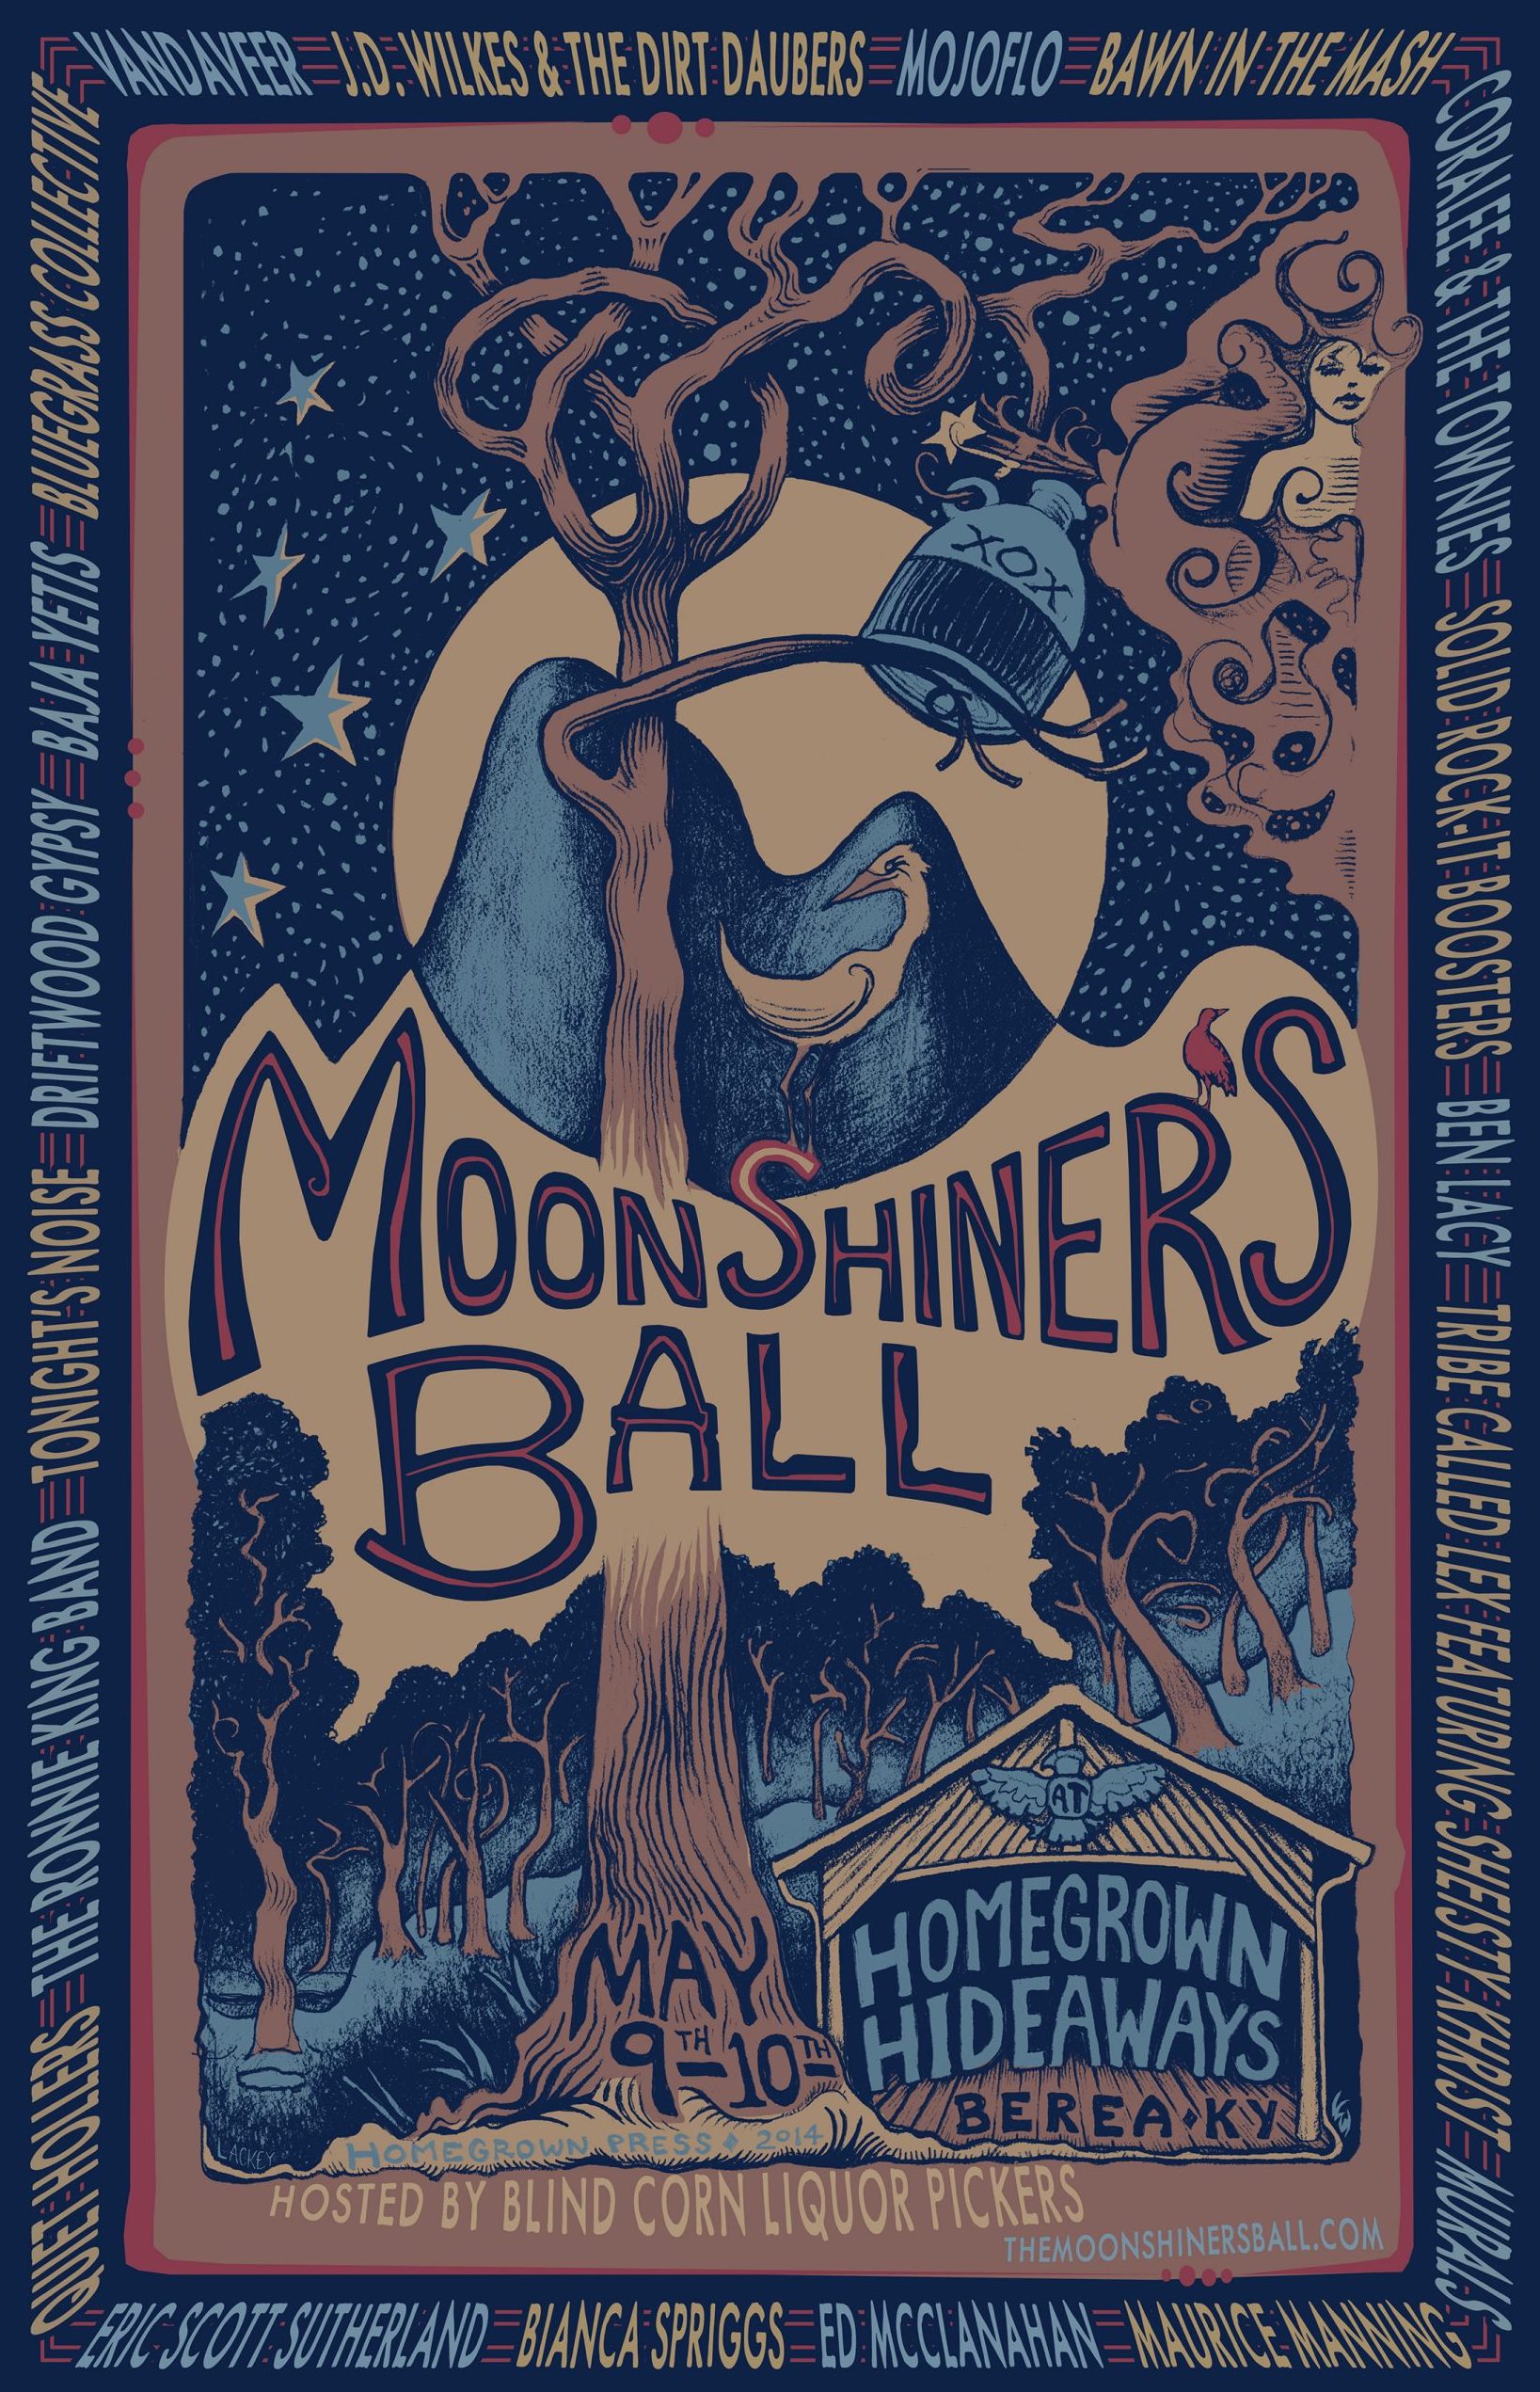 The Moonshiner’s Ball 2014 Lineup poster image